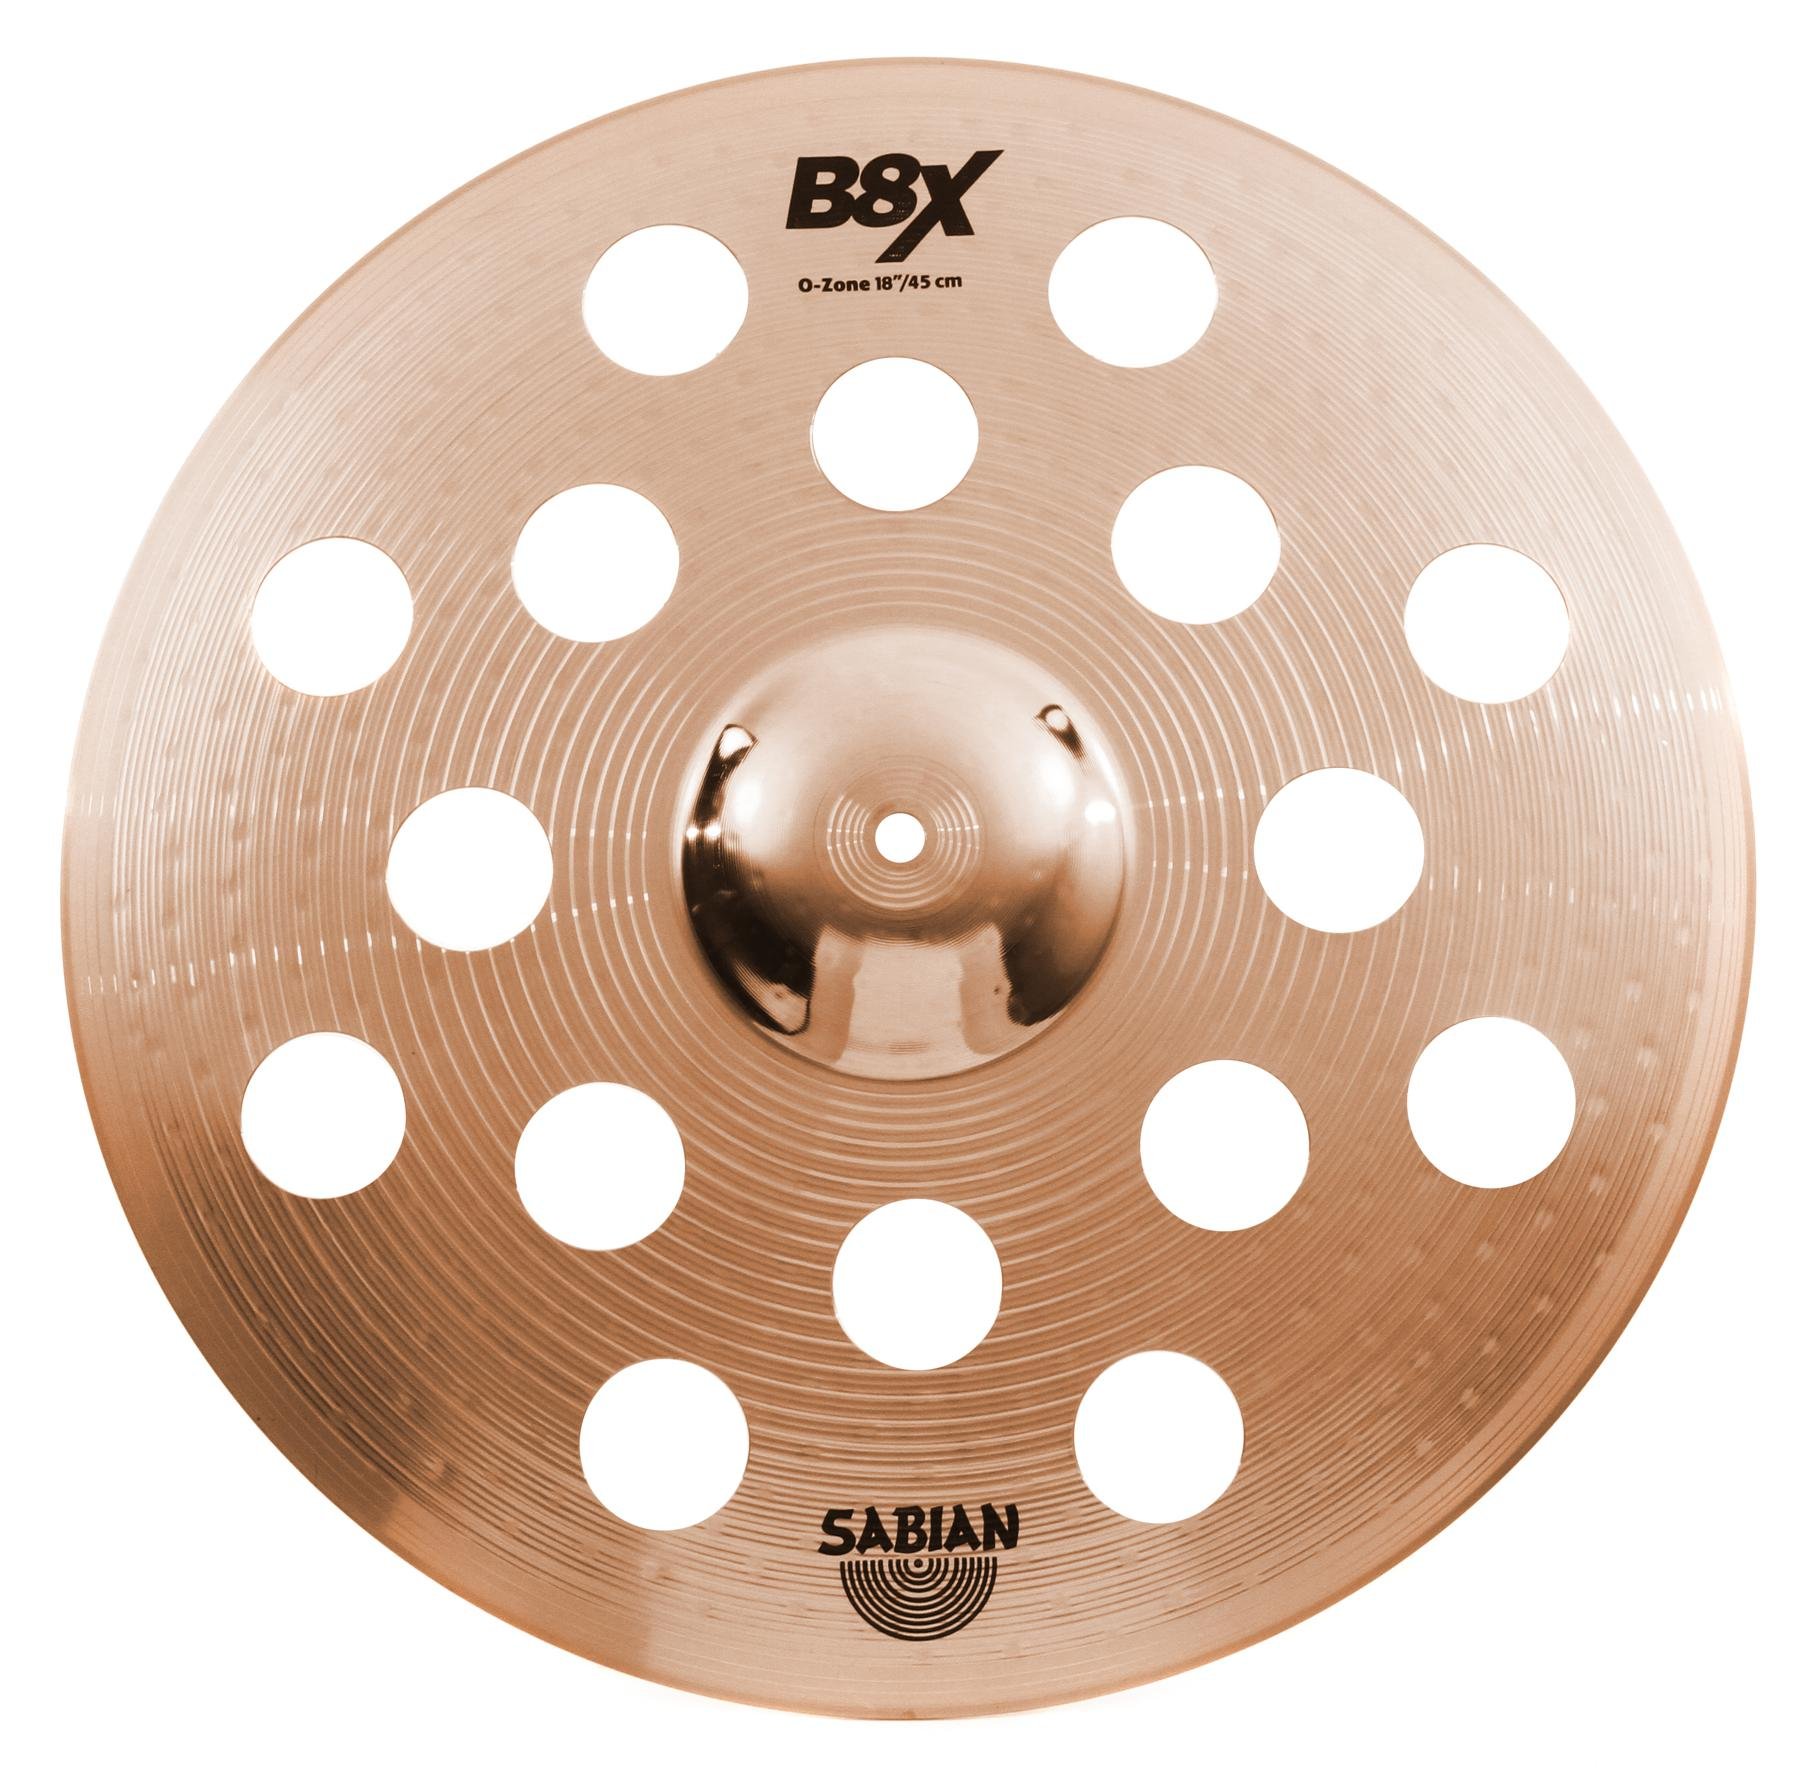 Sabian 18 inch B8X O-Zone Crash Cymbal | Sweetwater